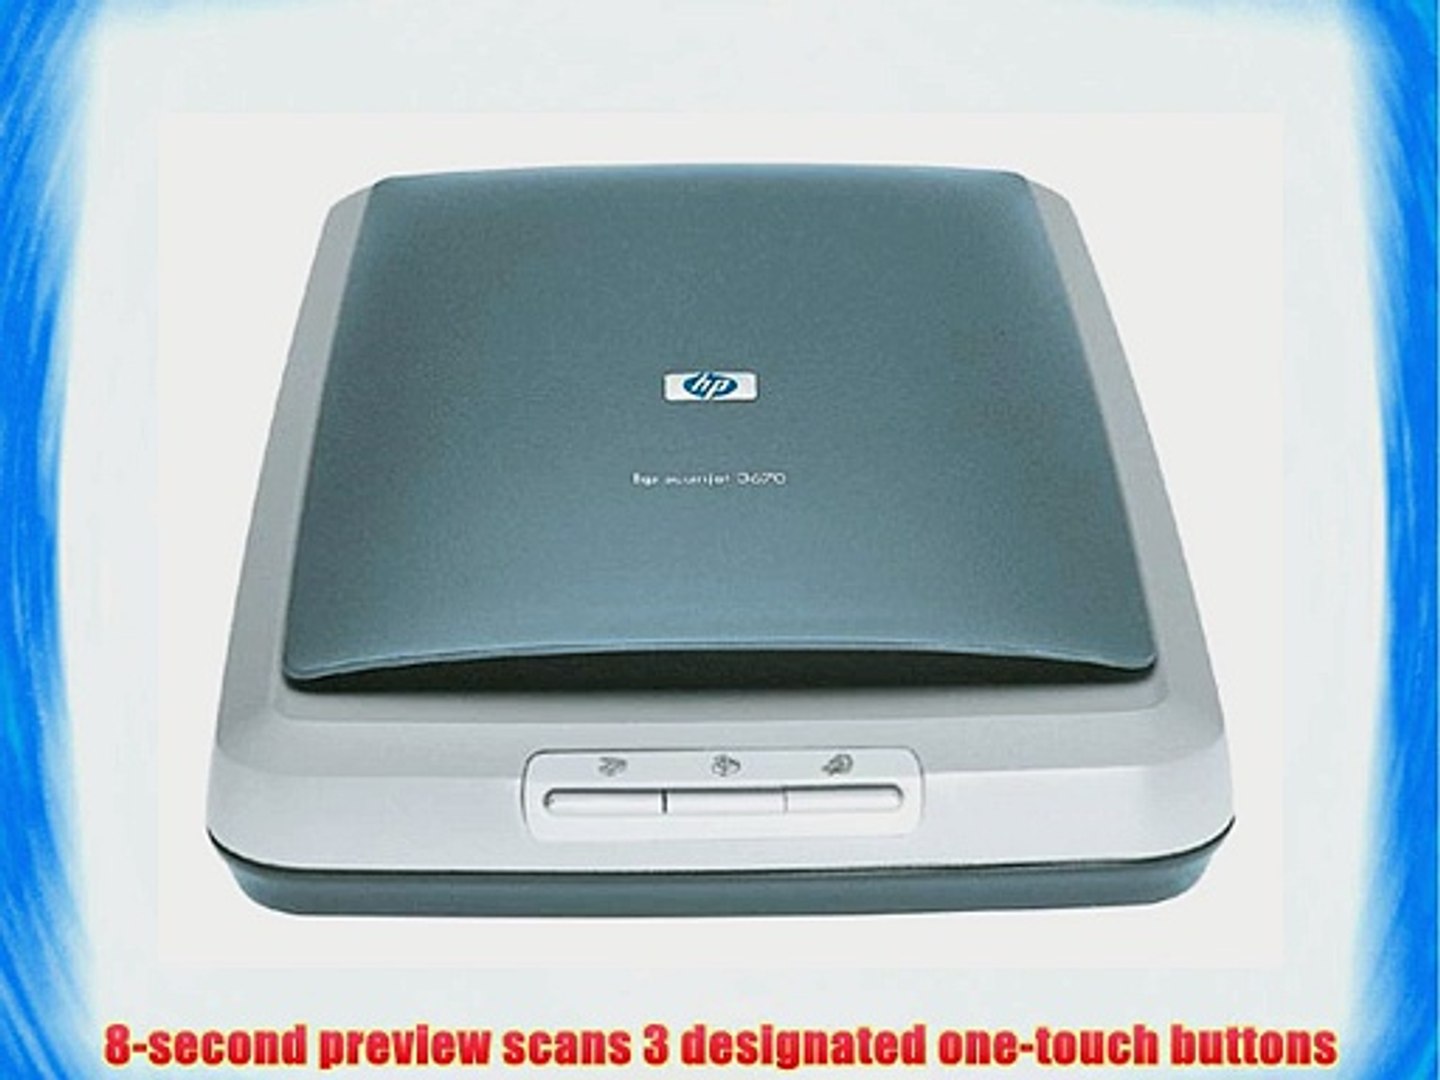 HP ScanJet 3670 Digital Flatbed Scanner - video Dailymotion